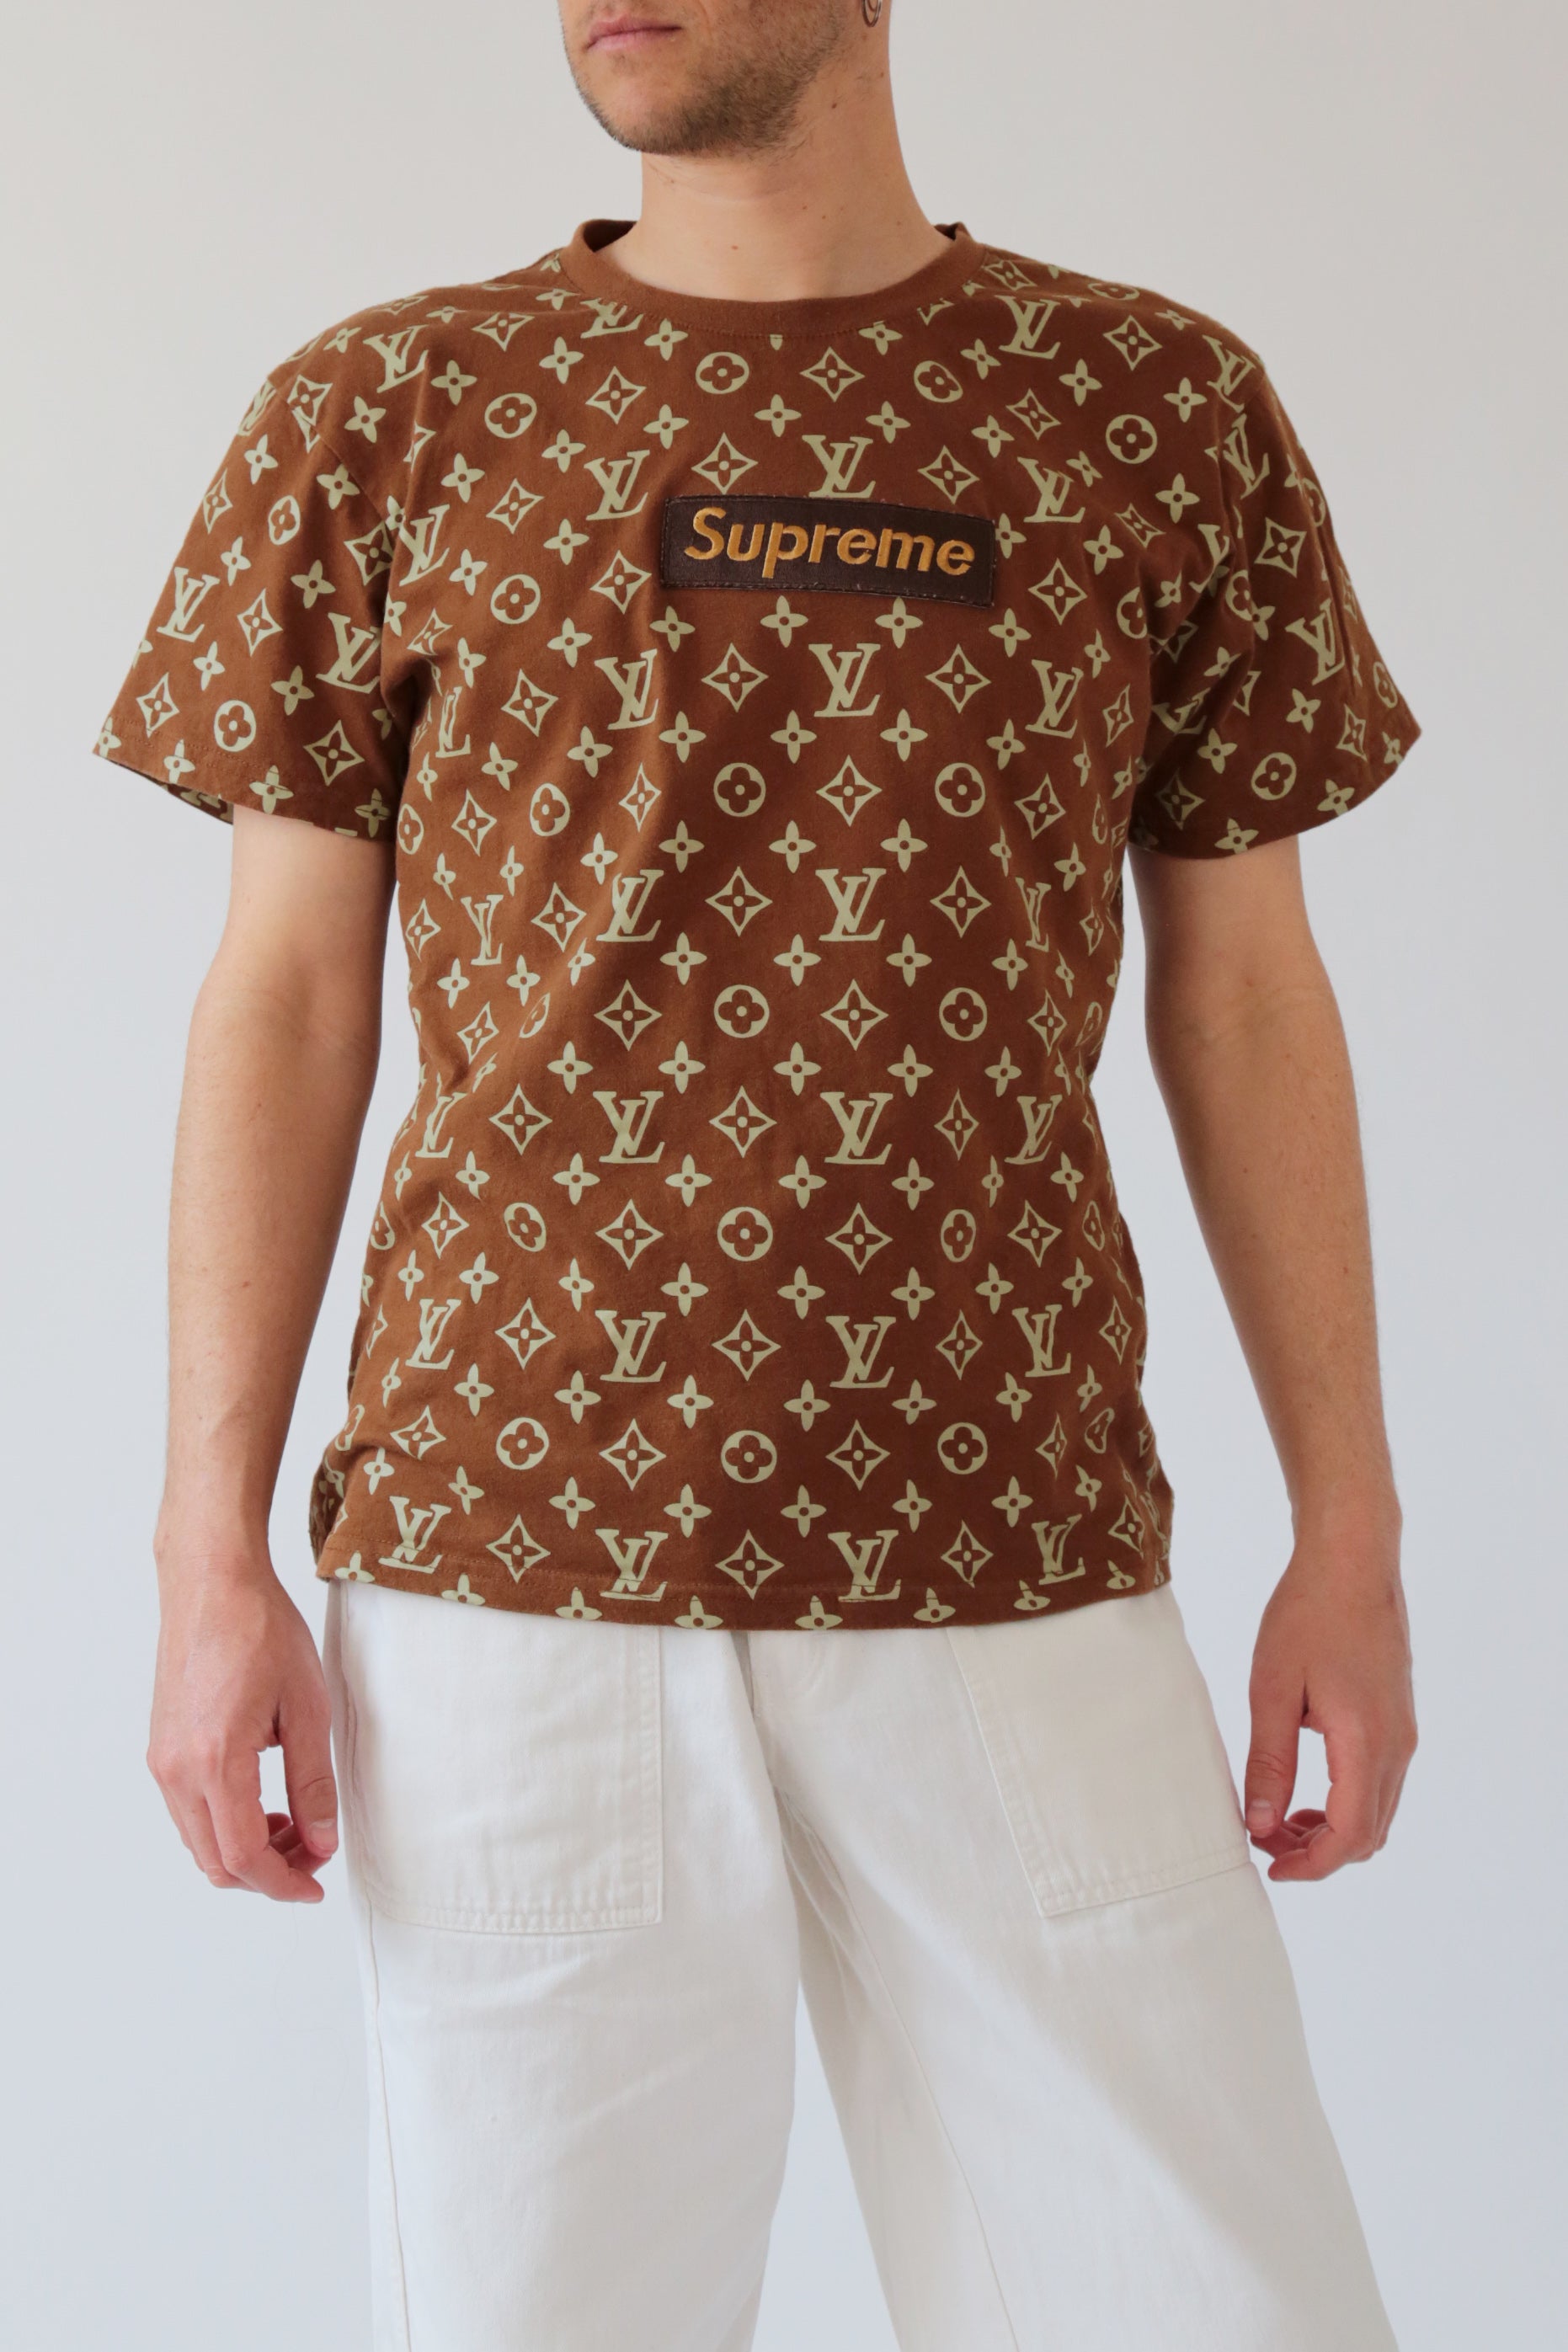 Supreme X LV T-Shirt - Supreme Shirts